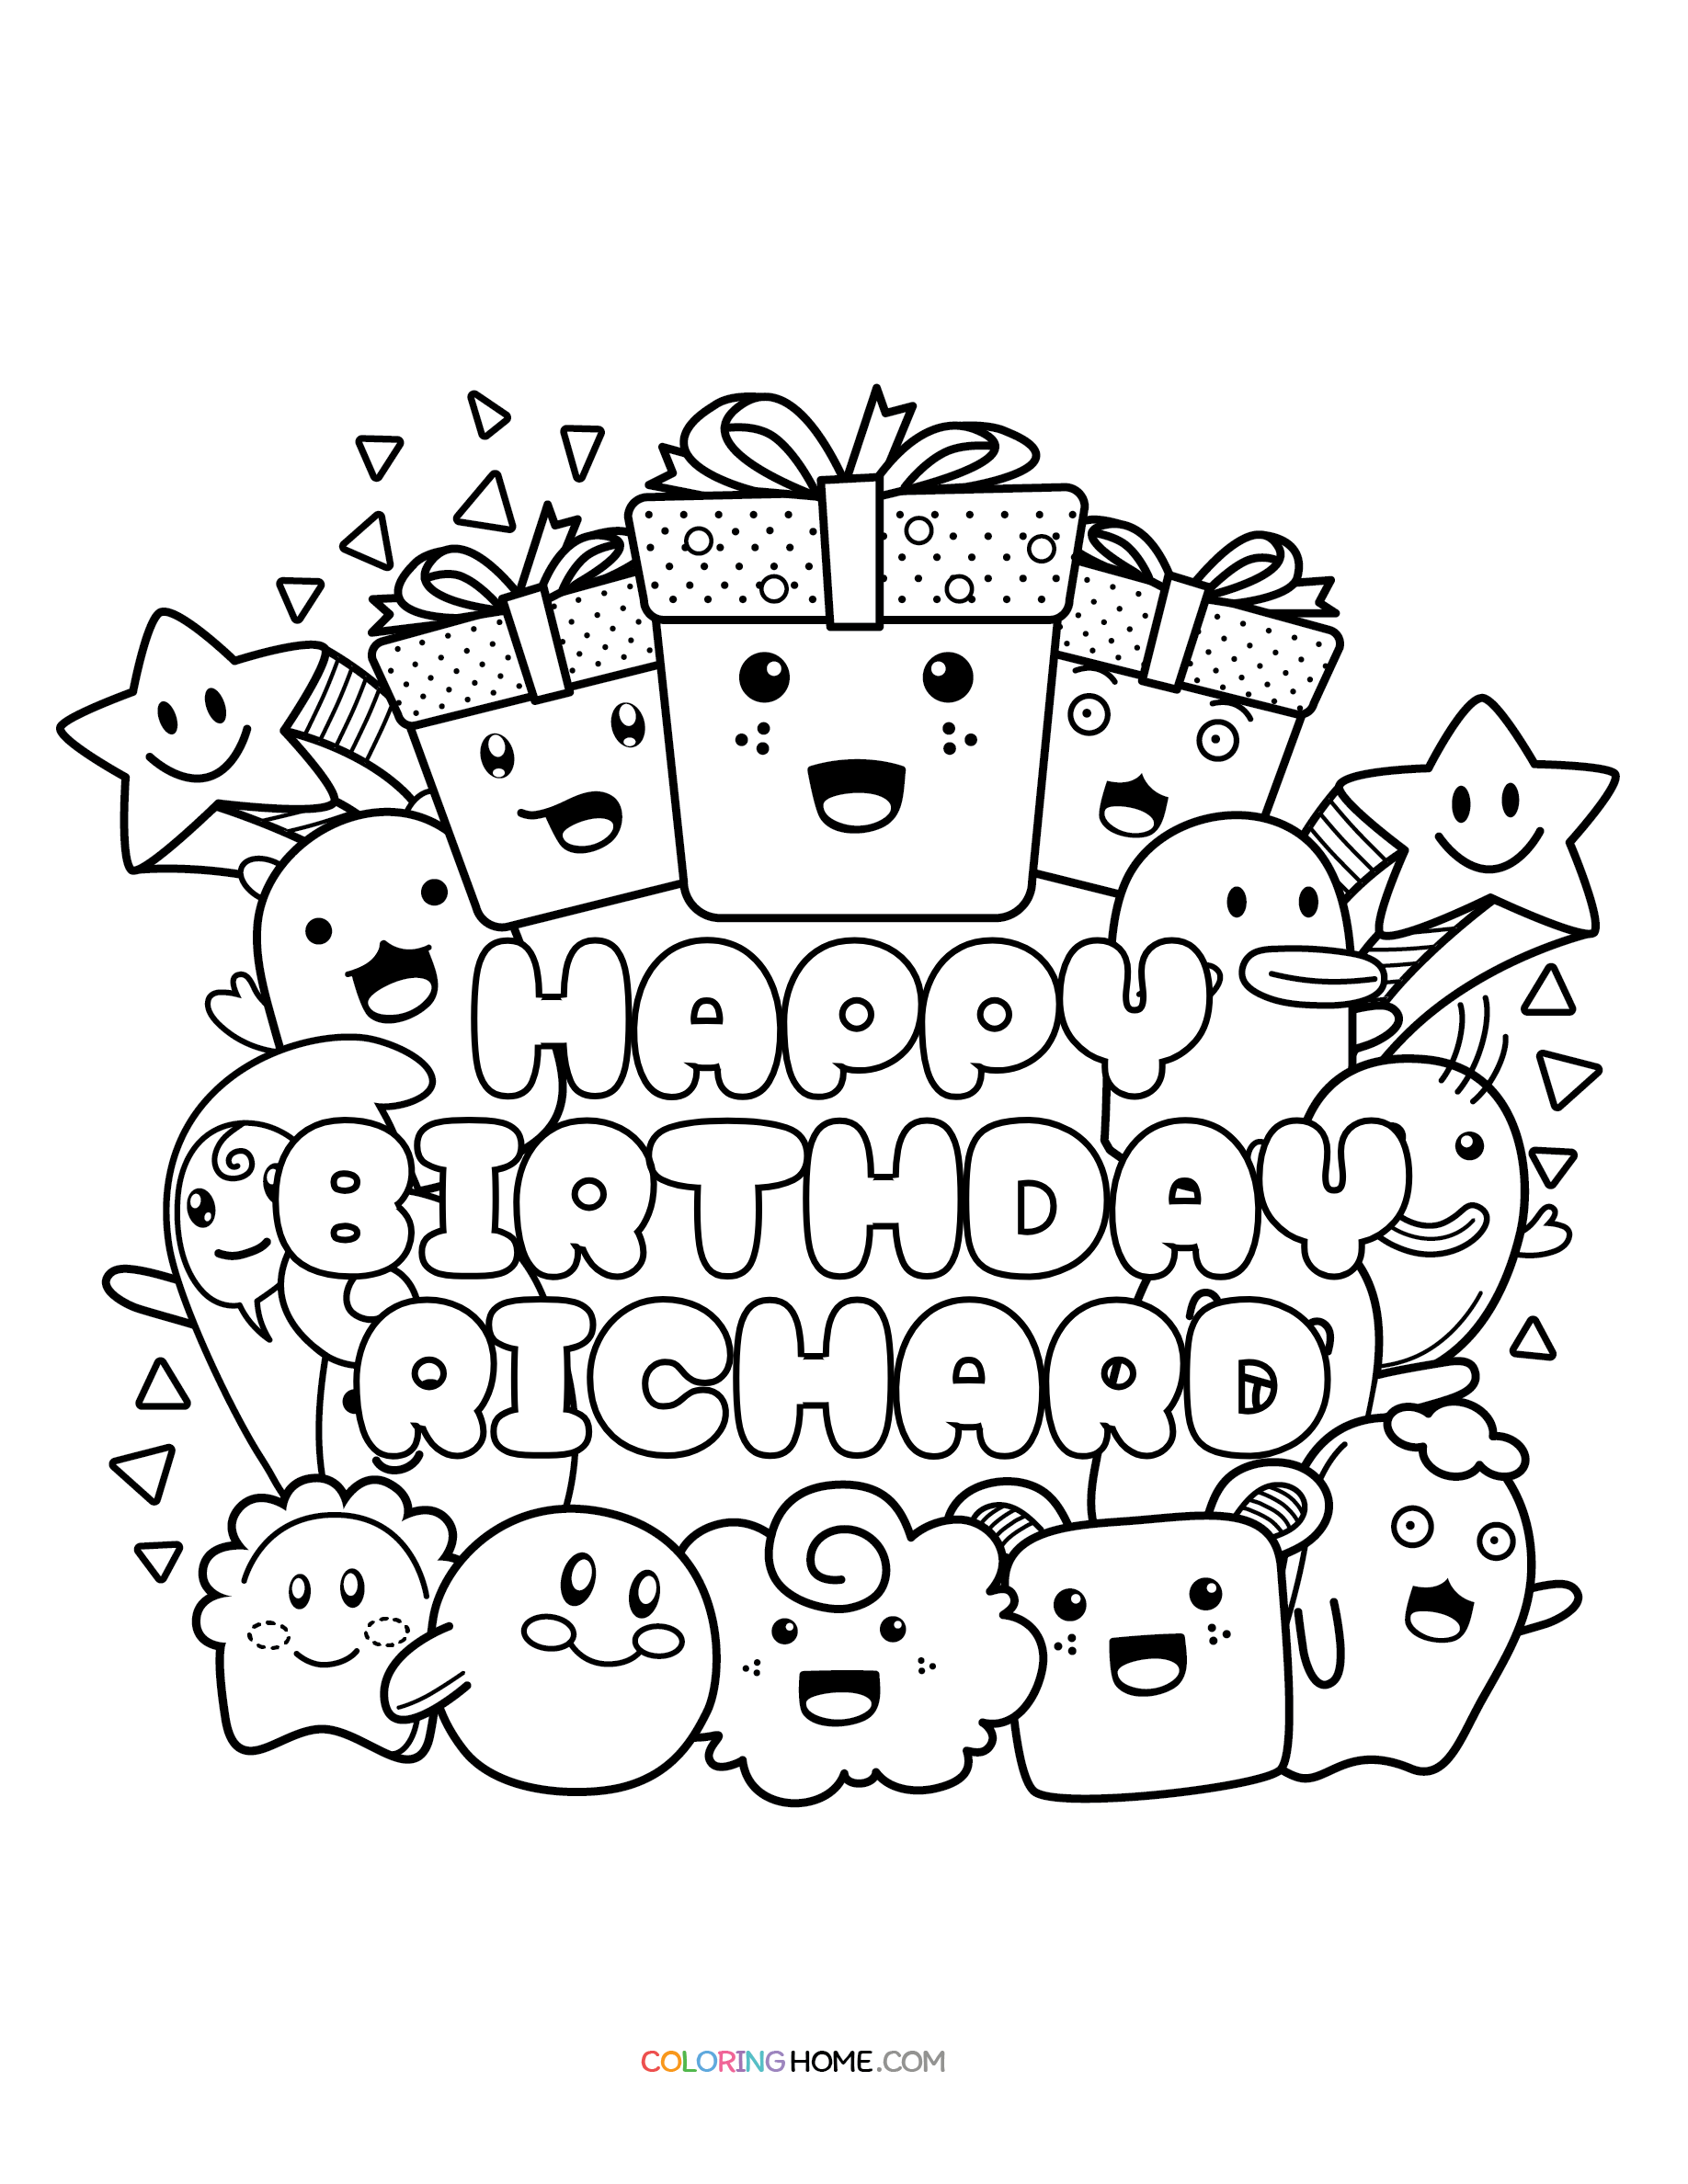 Happy Birthday Richard coloring page